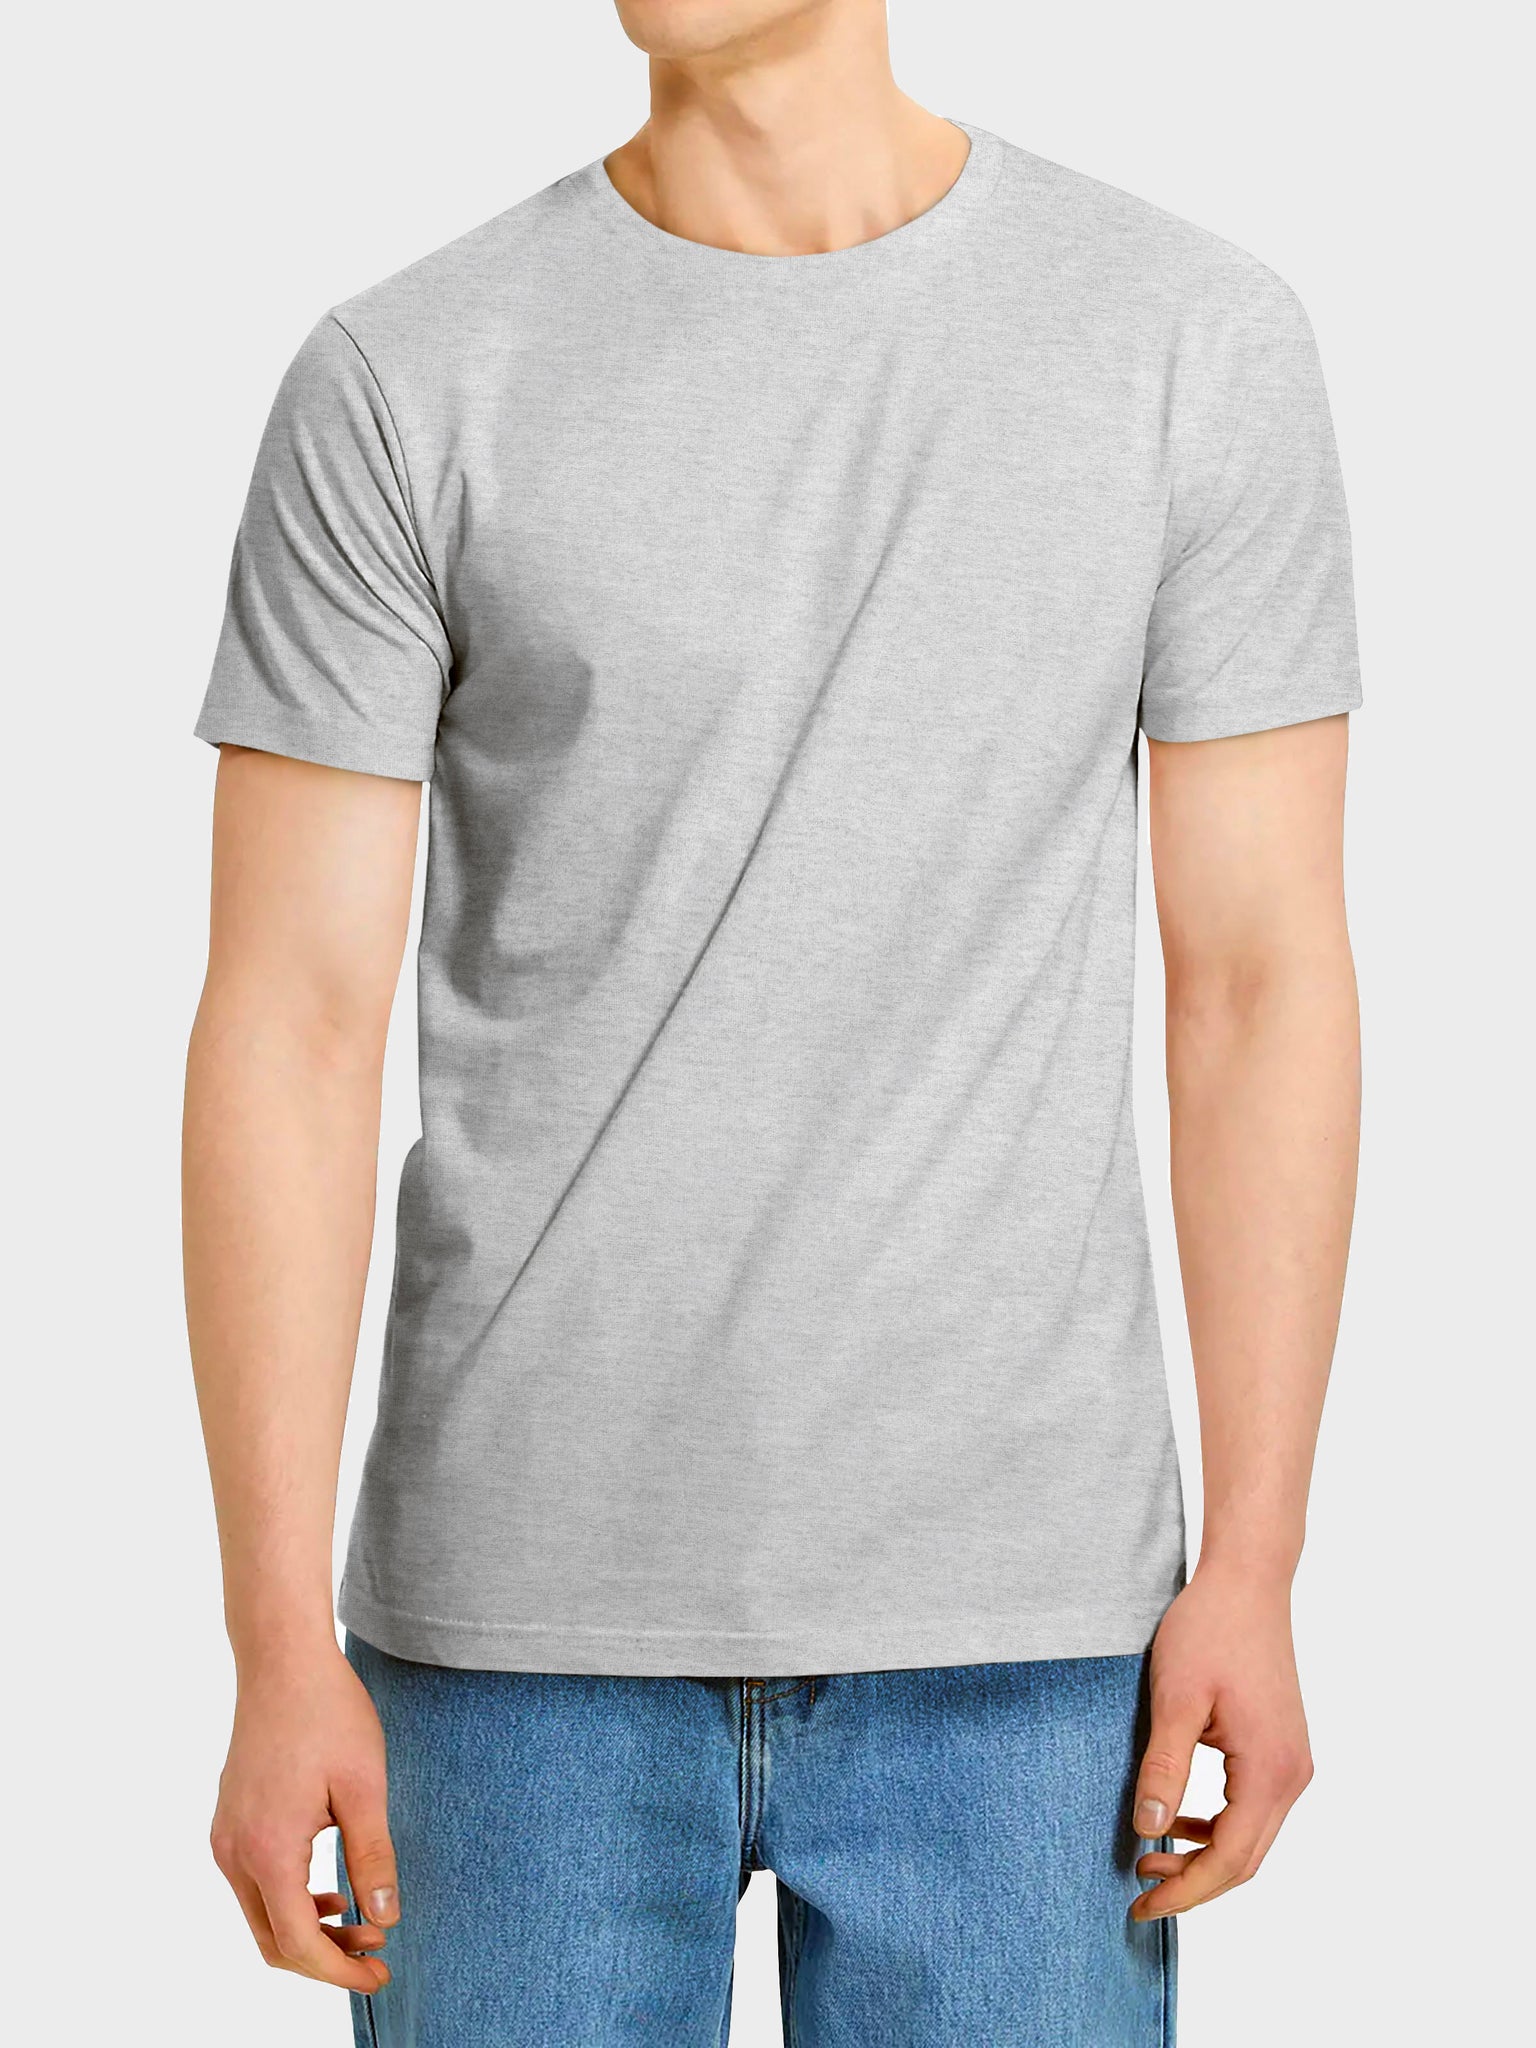 Mens Lightweight Classic Premium Cotton Short Sleeve Crew Neck T-Shirt